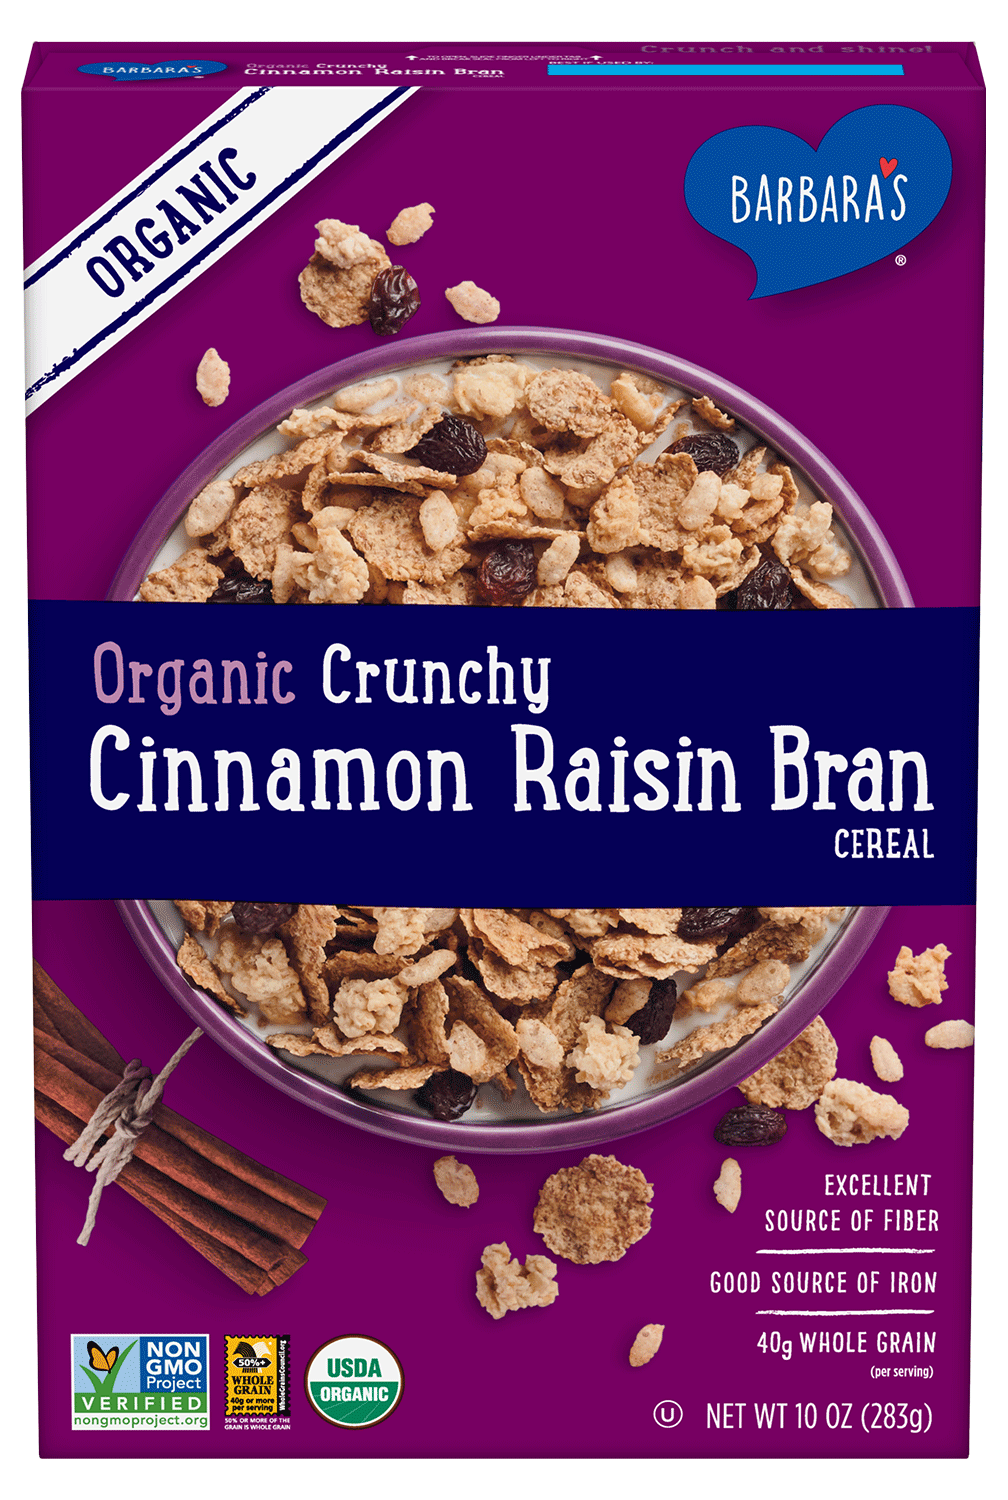 Barbara's Organic Crunchy Cinnamon Raisin Bran Cereal package